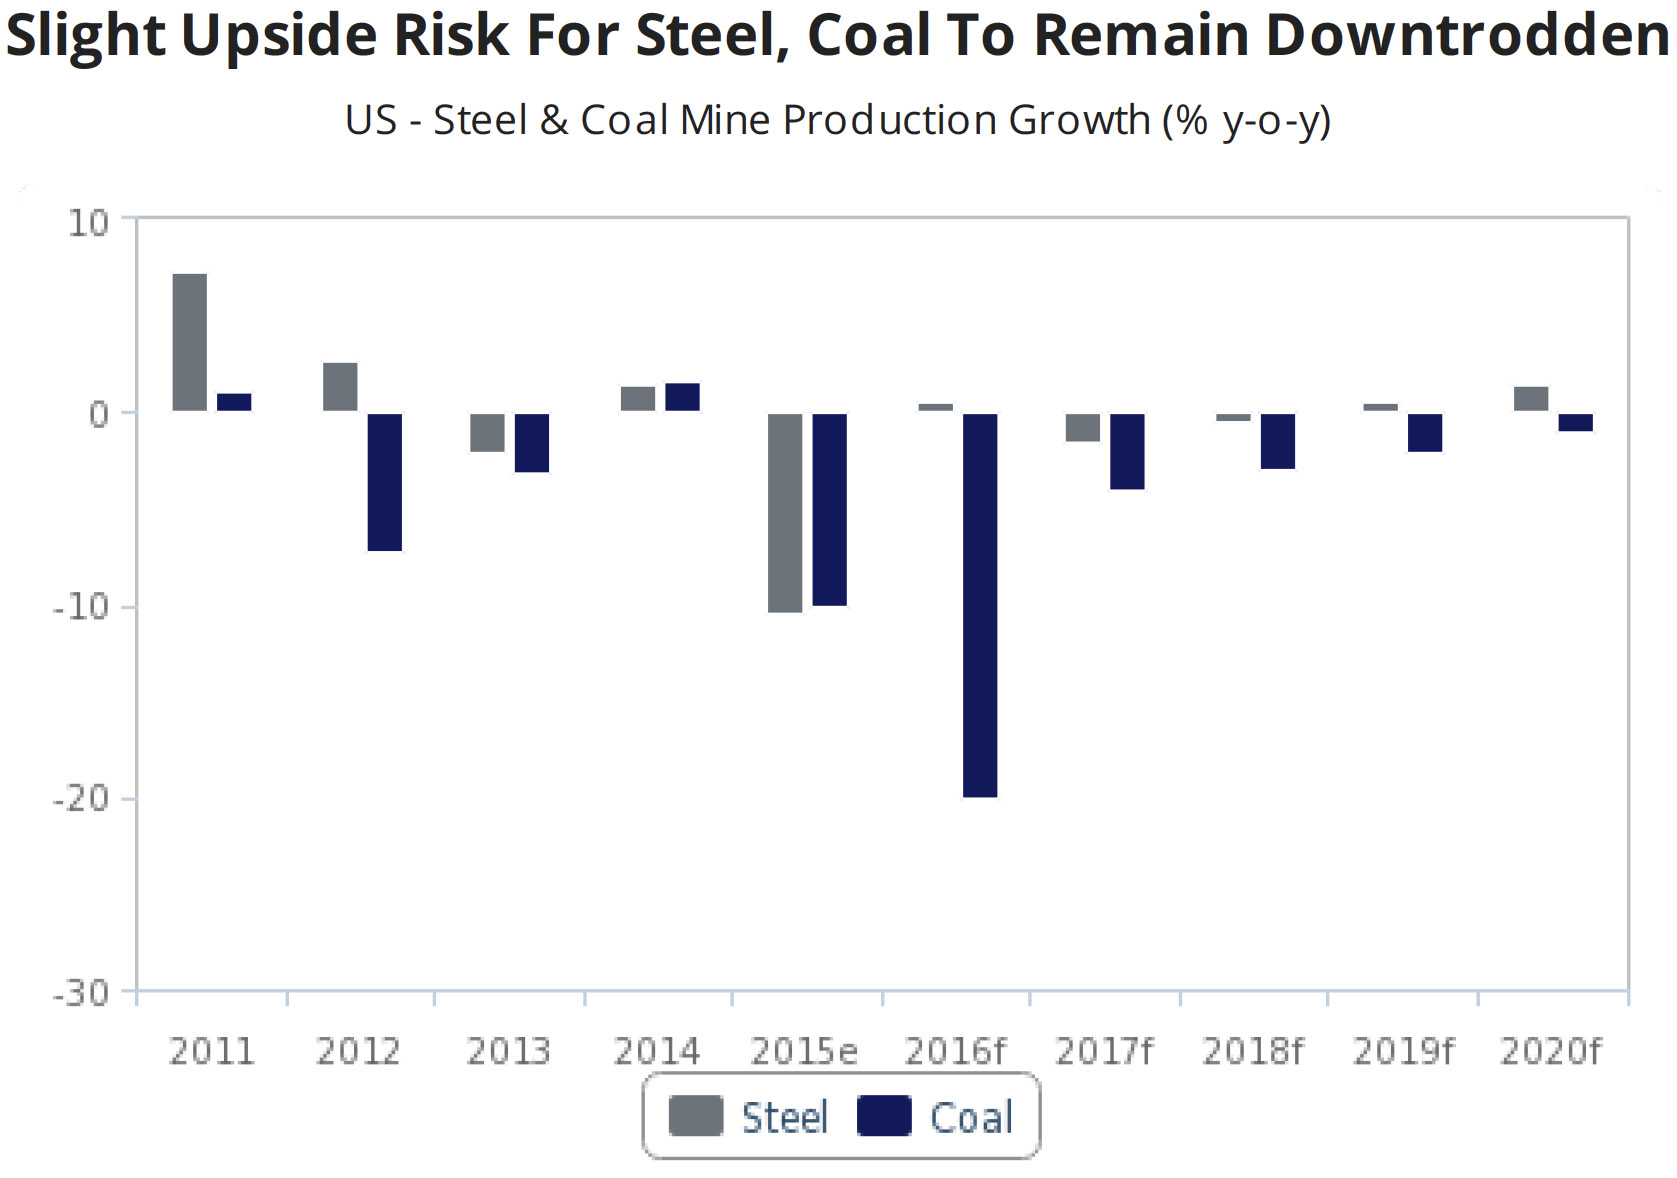 Slight Upside Risk for Steel, Coal to Remain Downtrodden